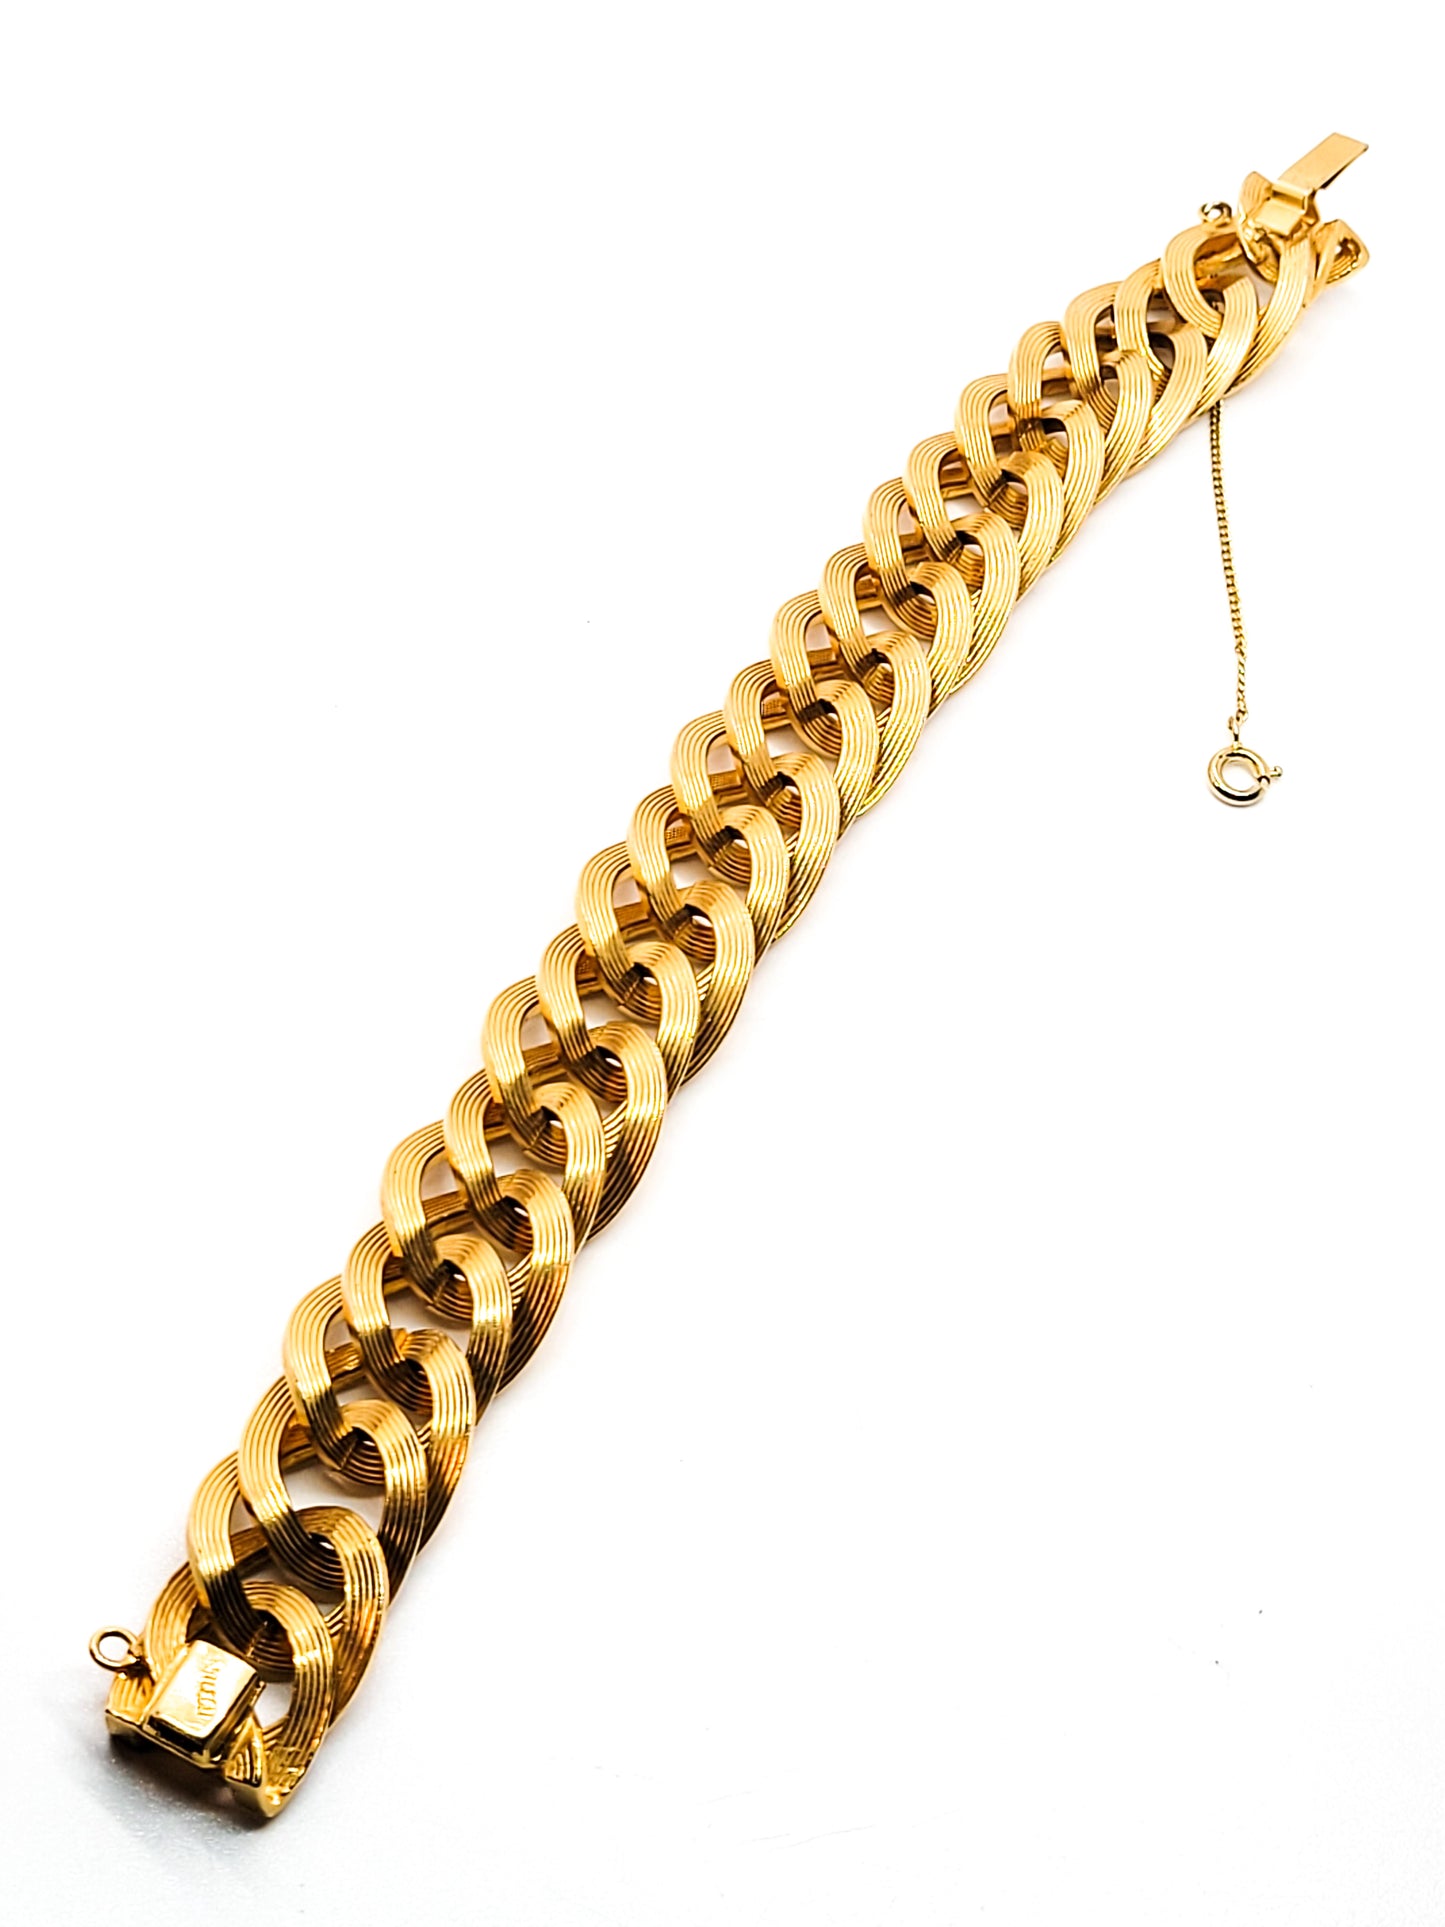 Castlecliff Gold toned vintage signed chain link textured tennis bracelet